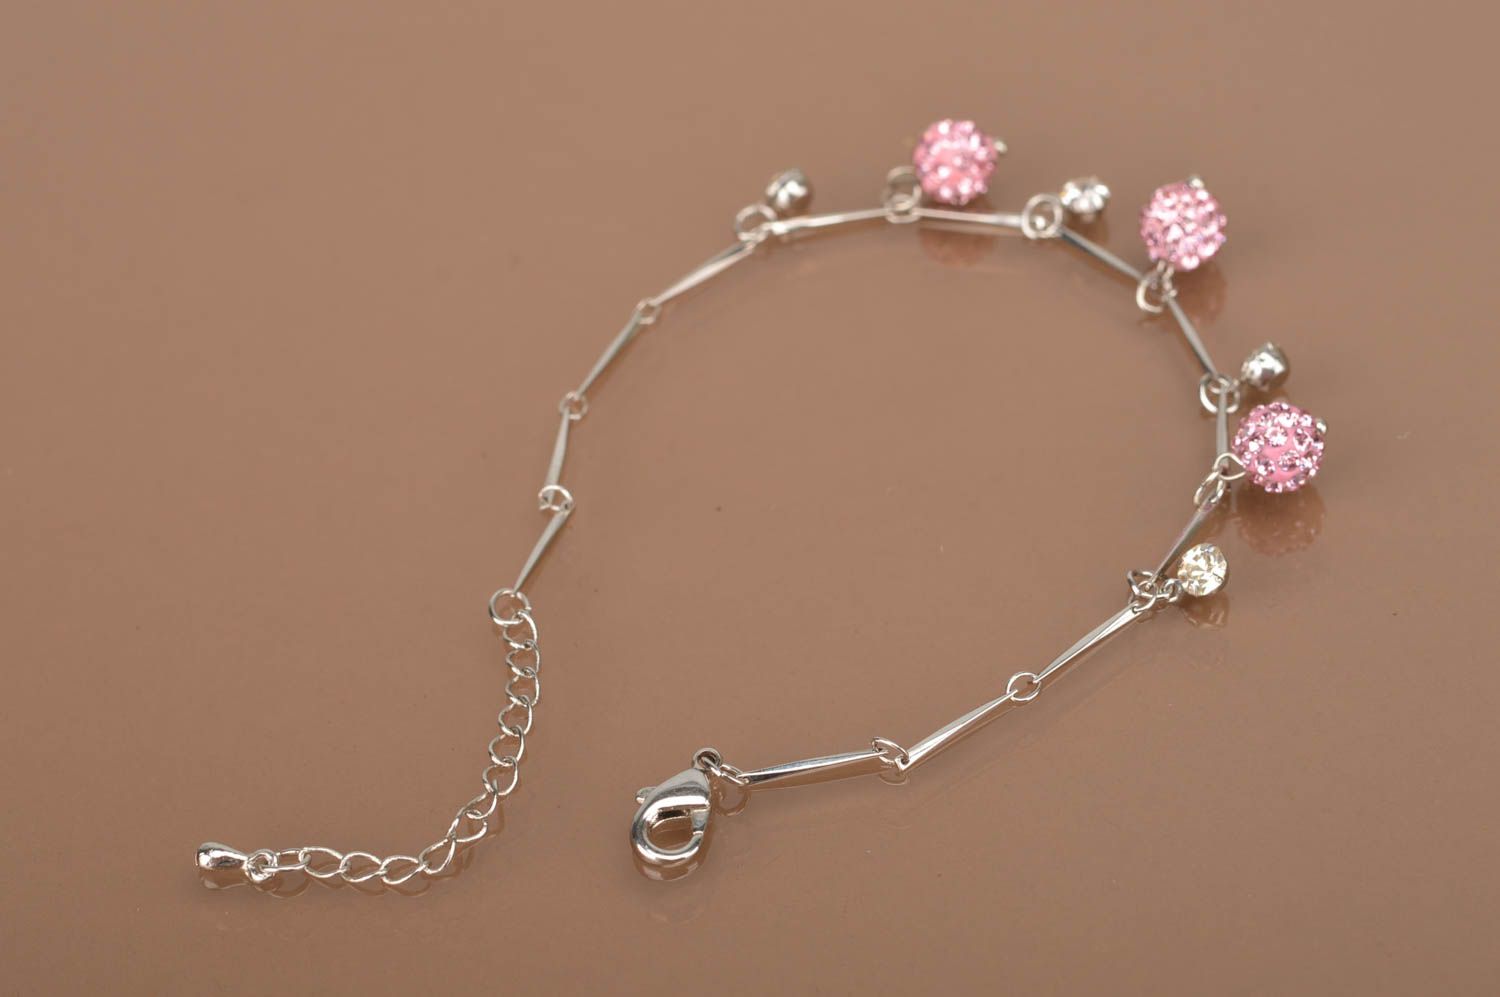 Metal bracelet handmade jewelry charm bracelet designer accessories gift for her photo 4